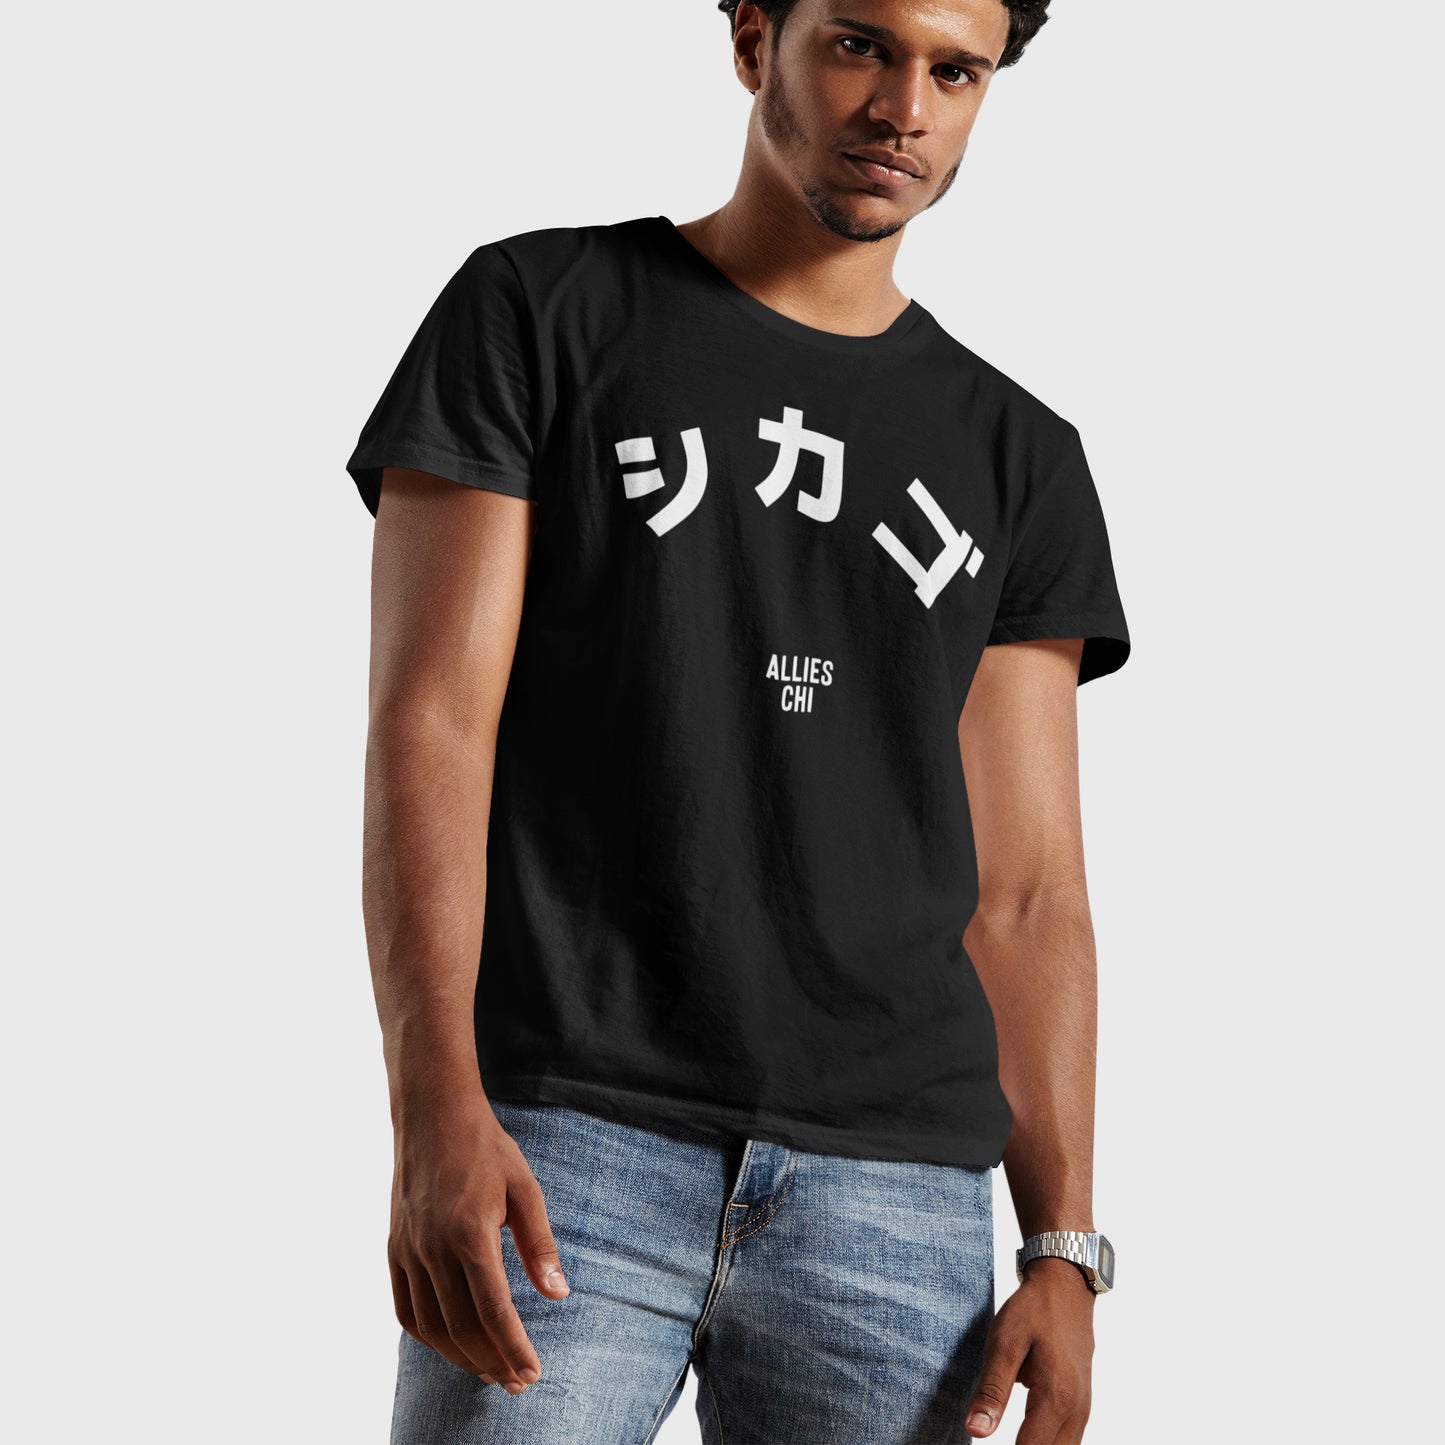 Chicago Japanese T-shirt